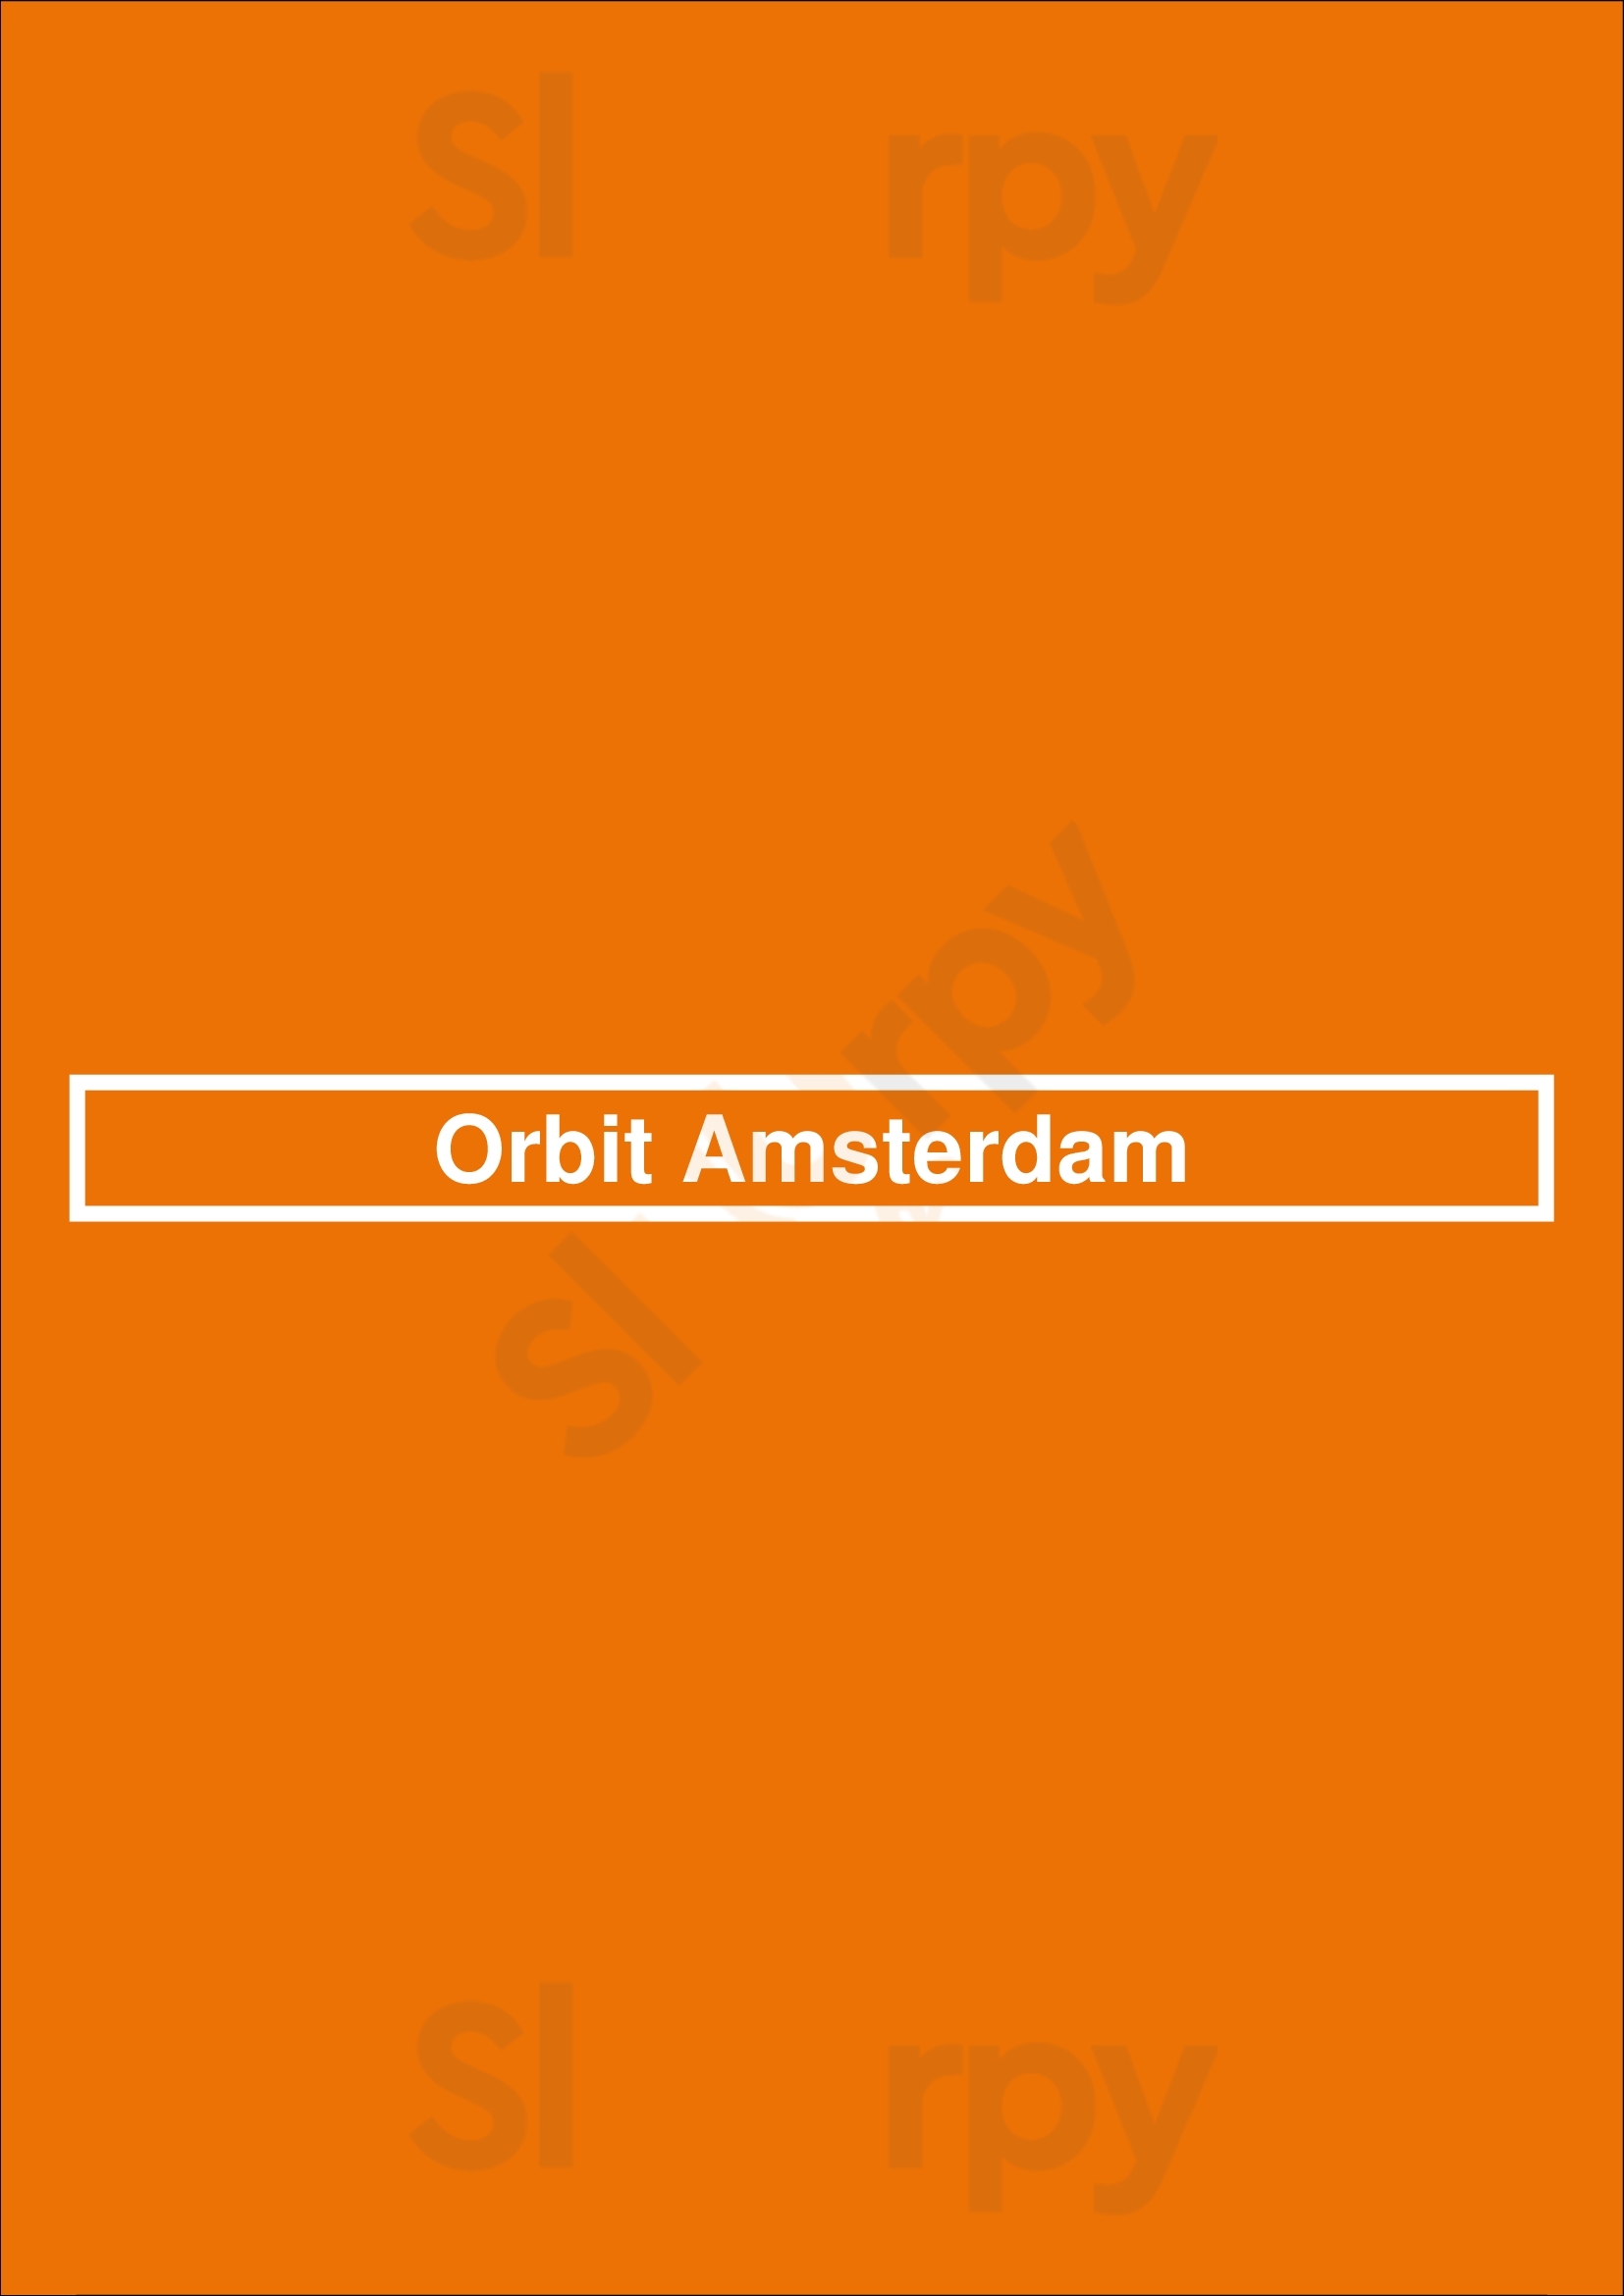 Orbit Amsterdam Amsterdam Menu - 1